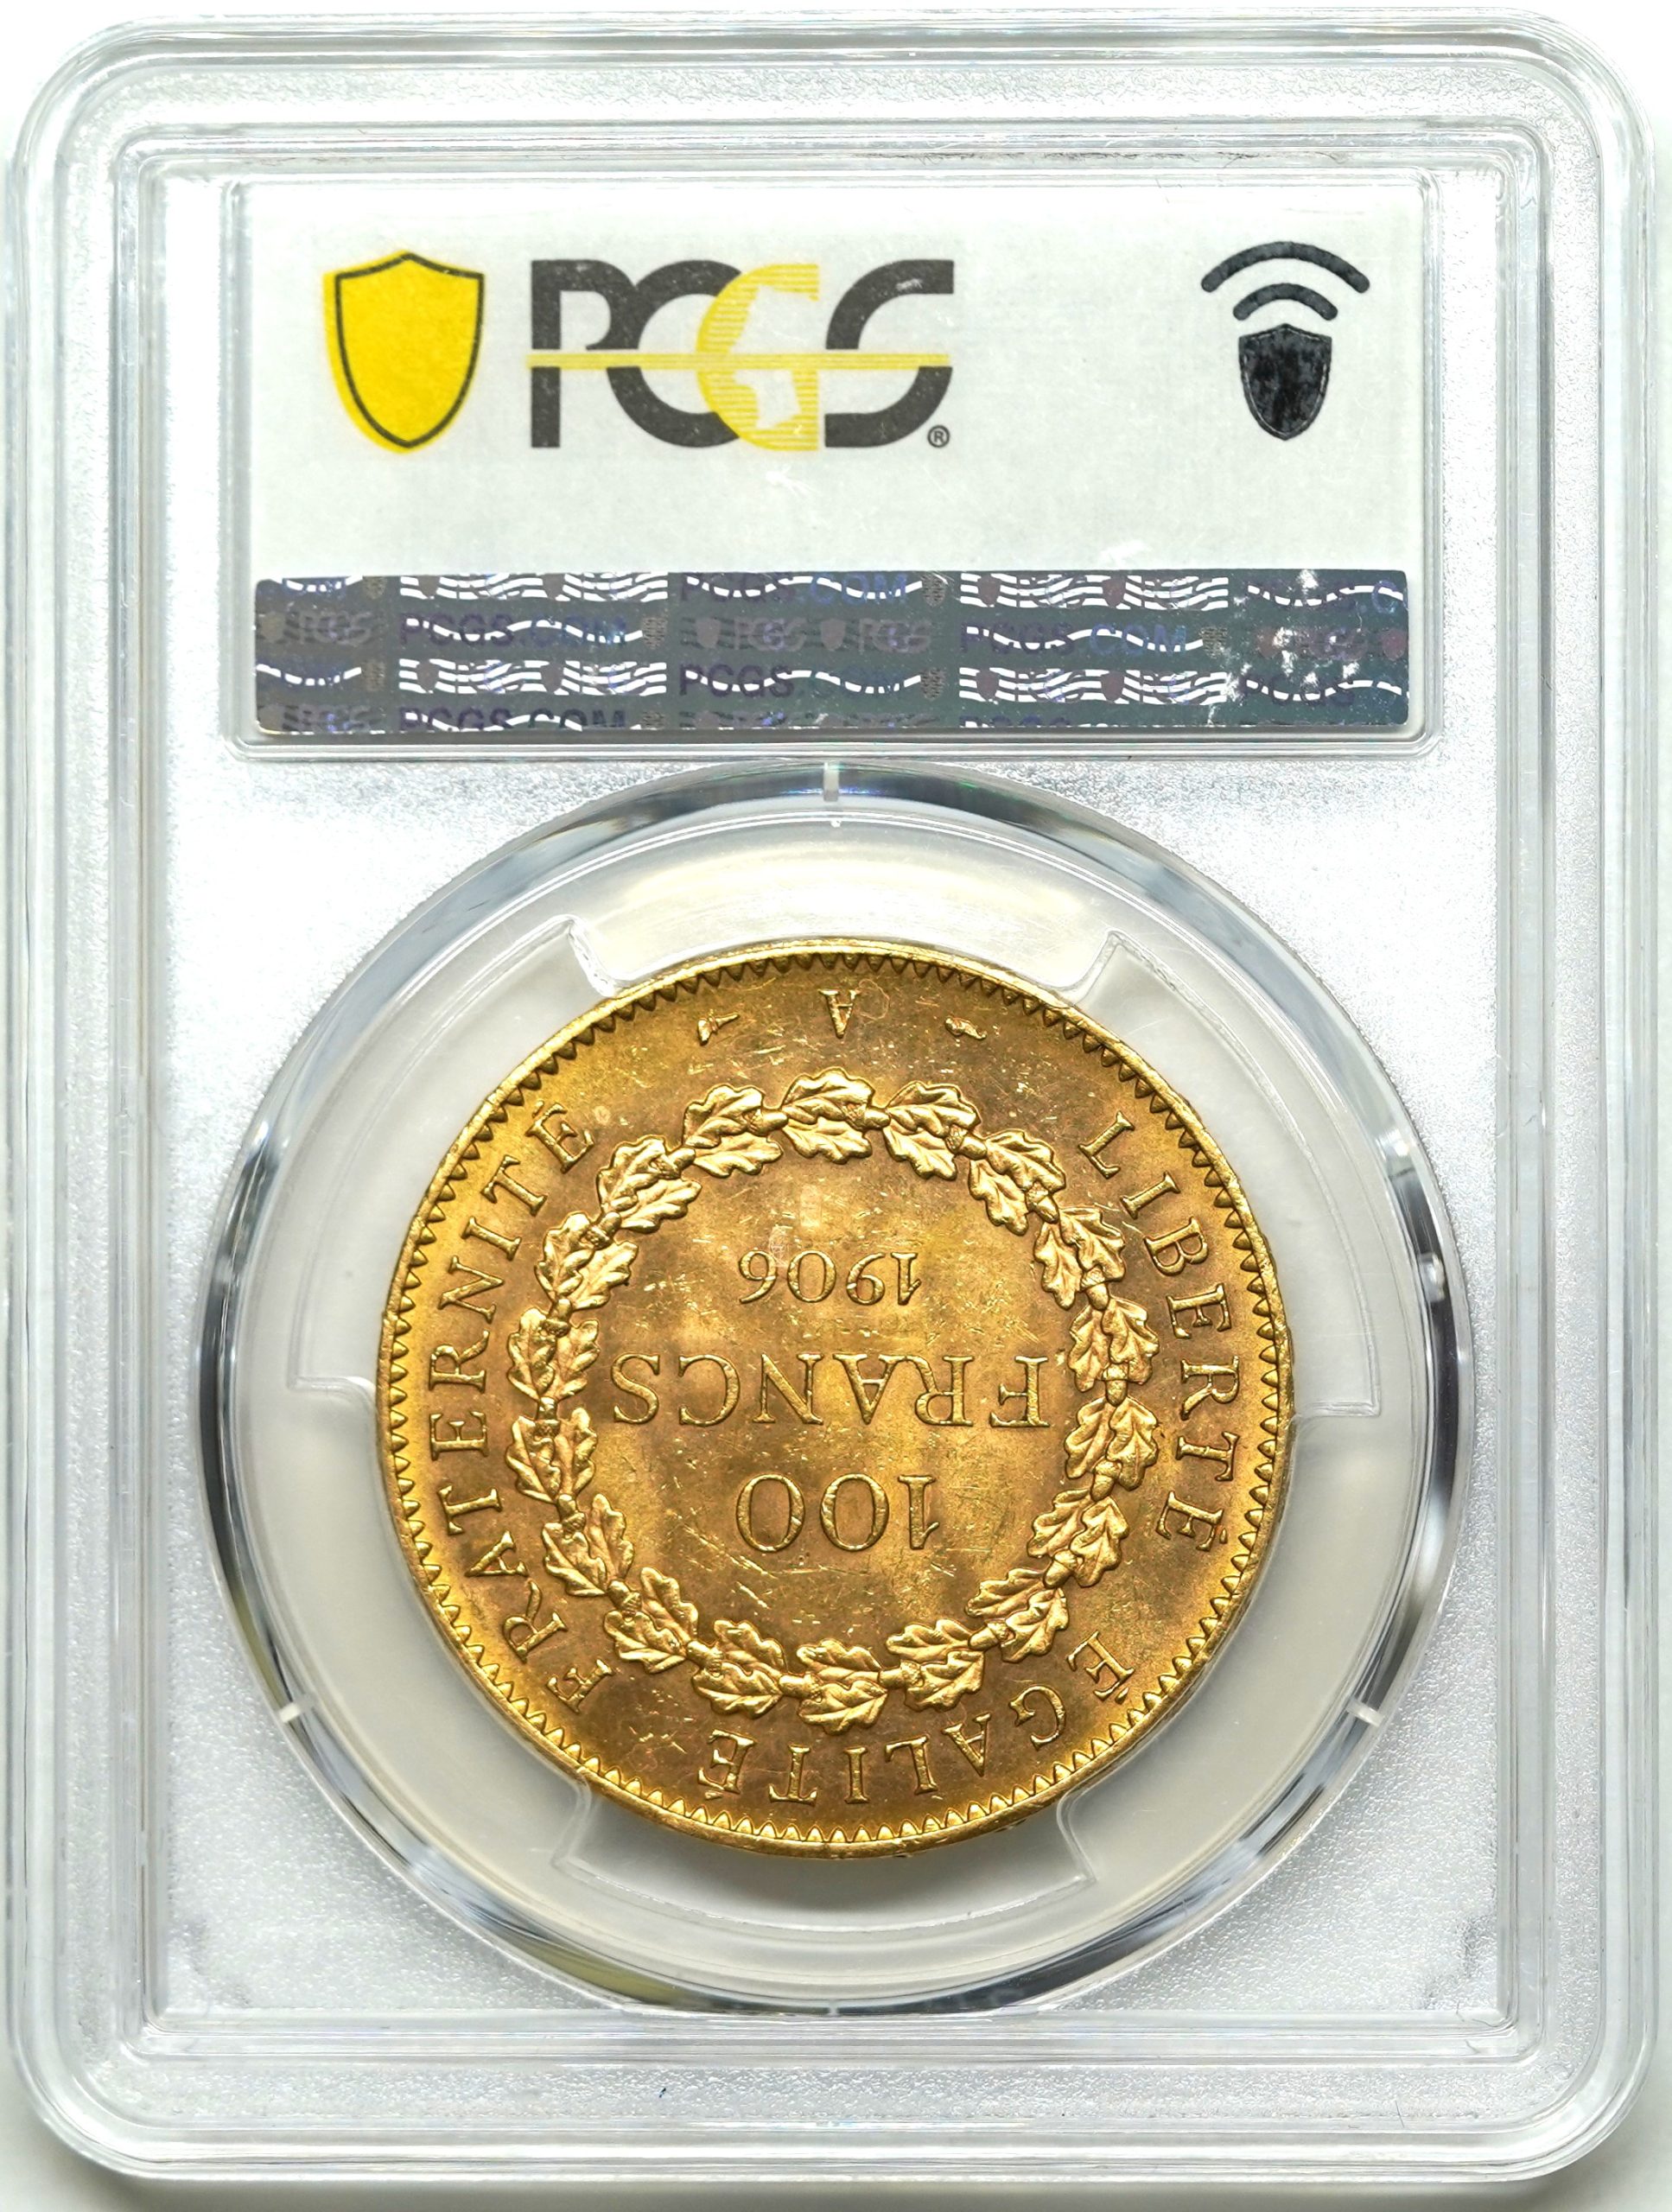 Sold】【ミントエラー】1906年 フランス 100フラン金貨 Mint Error ...